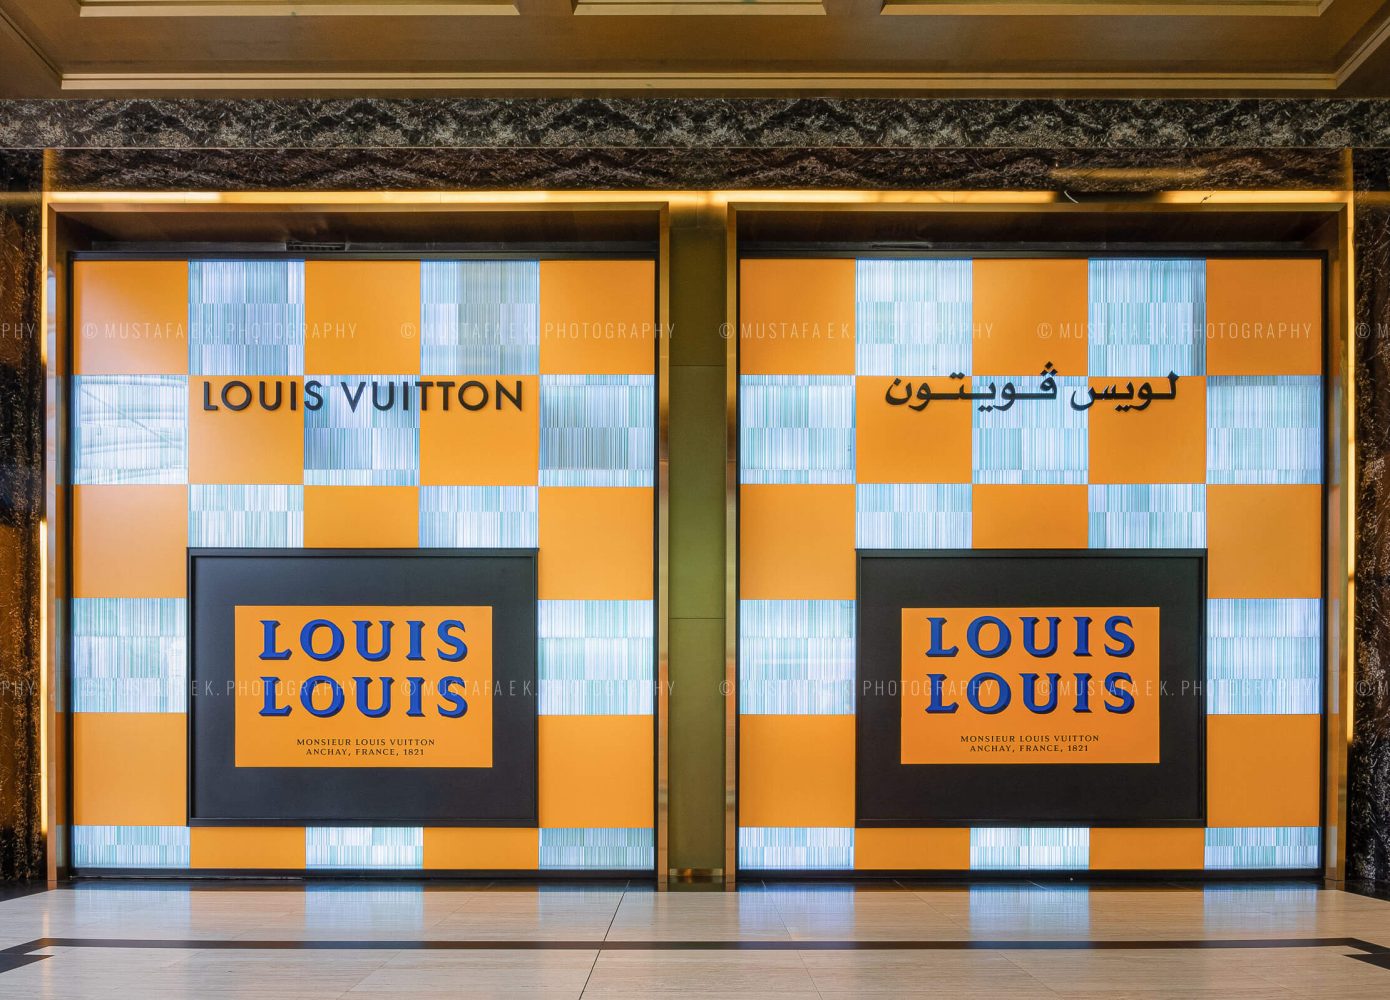 Louis Vuitton Kuwait Avenues Mall Interior Retail Store Photography Professional Freelance Photographer Dubai UAE 03